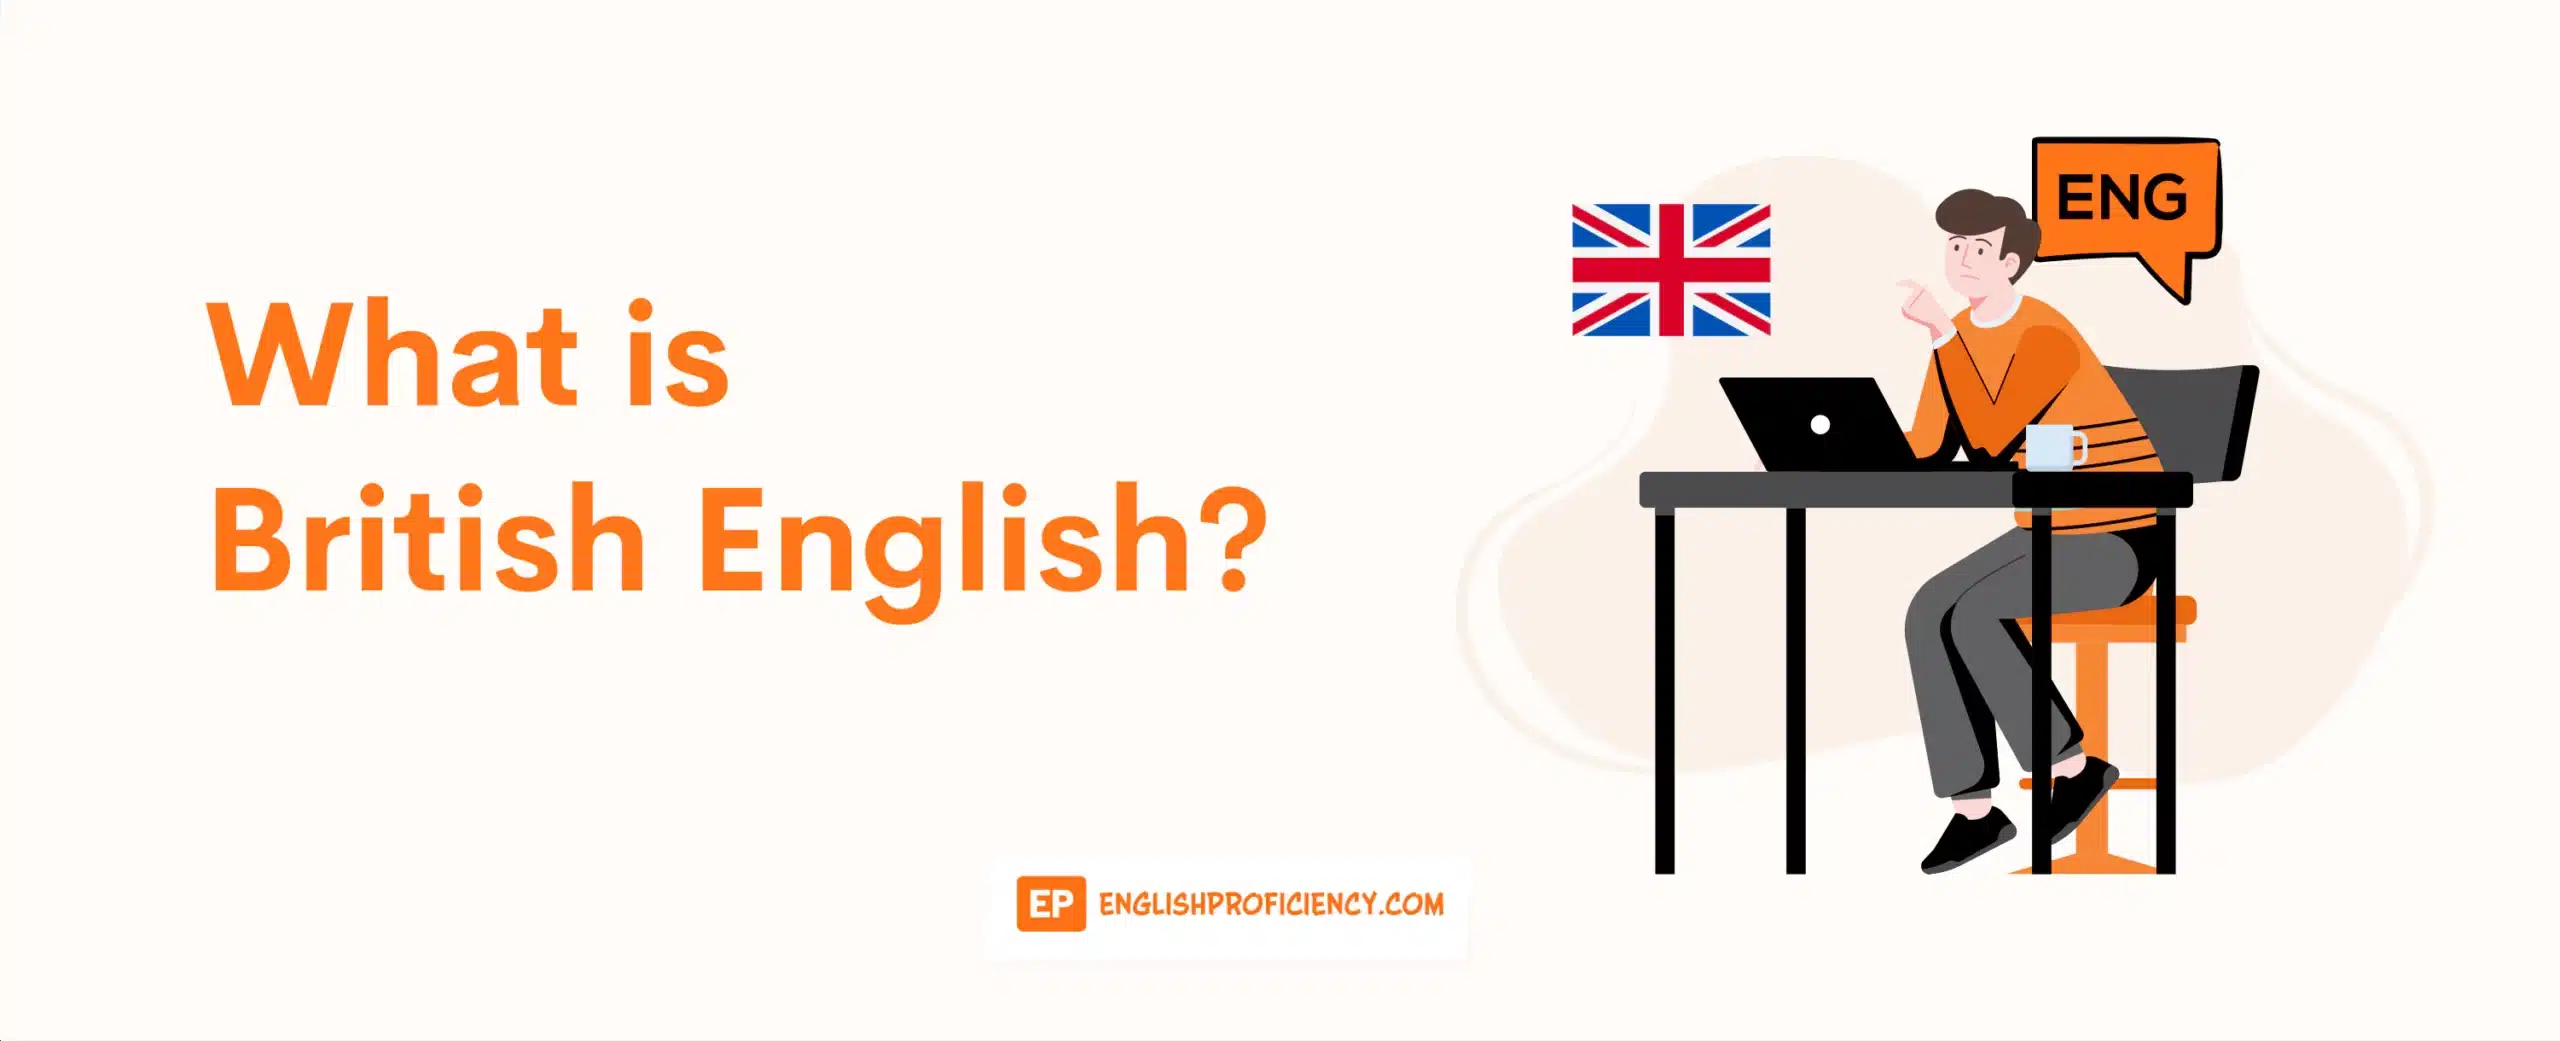 What is British English